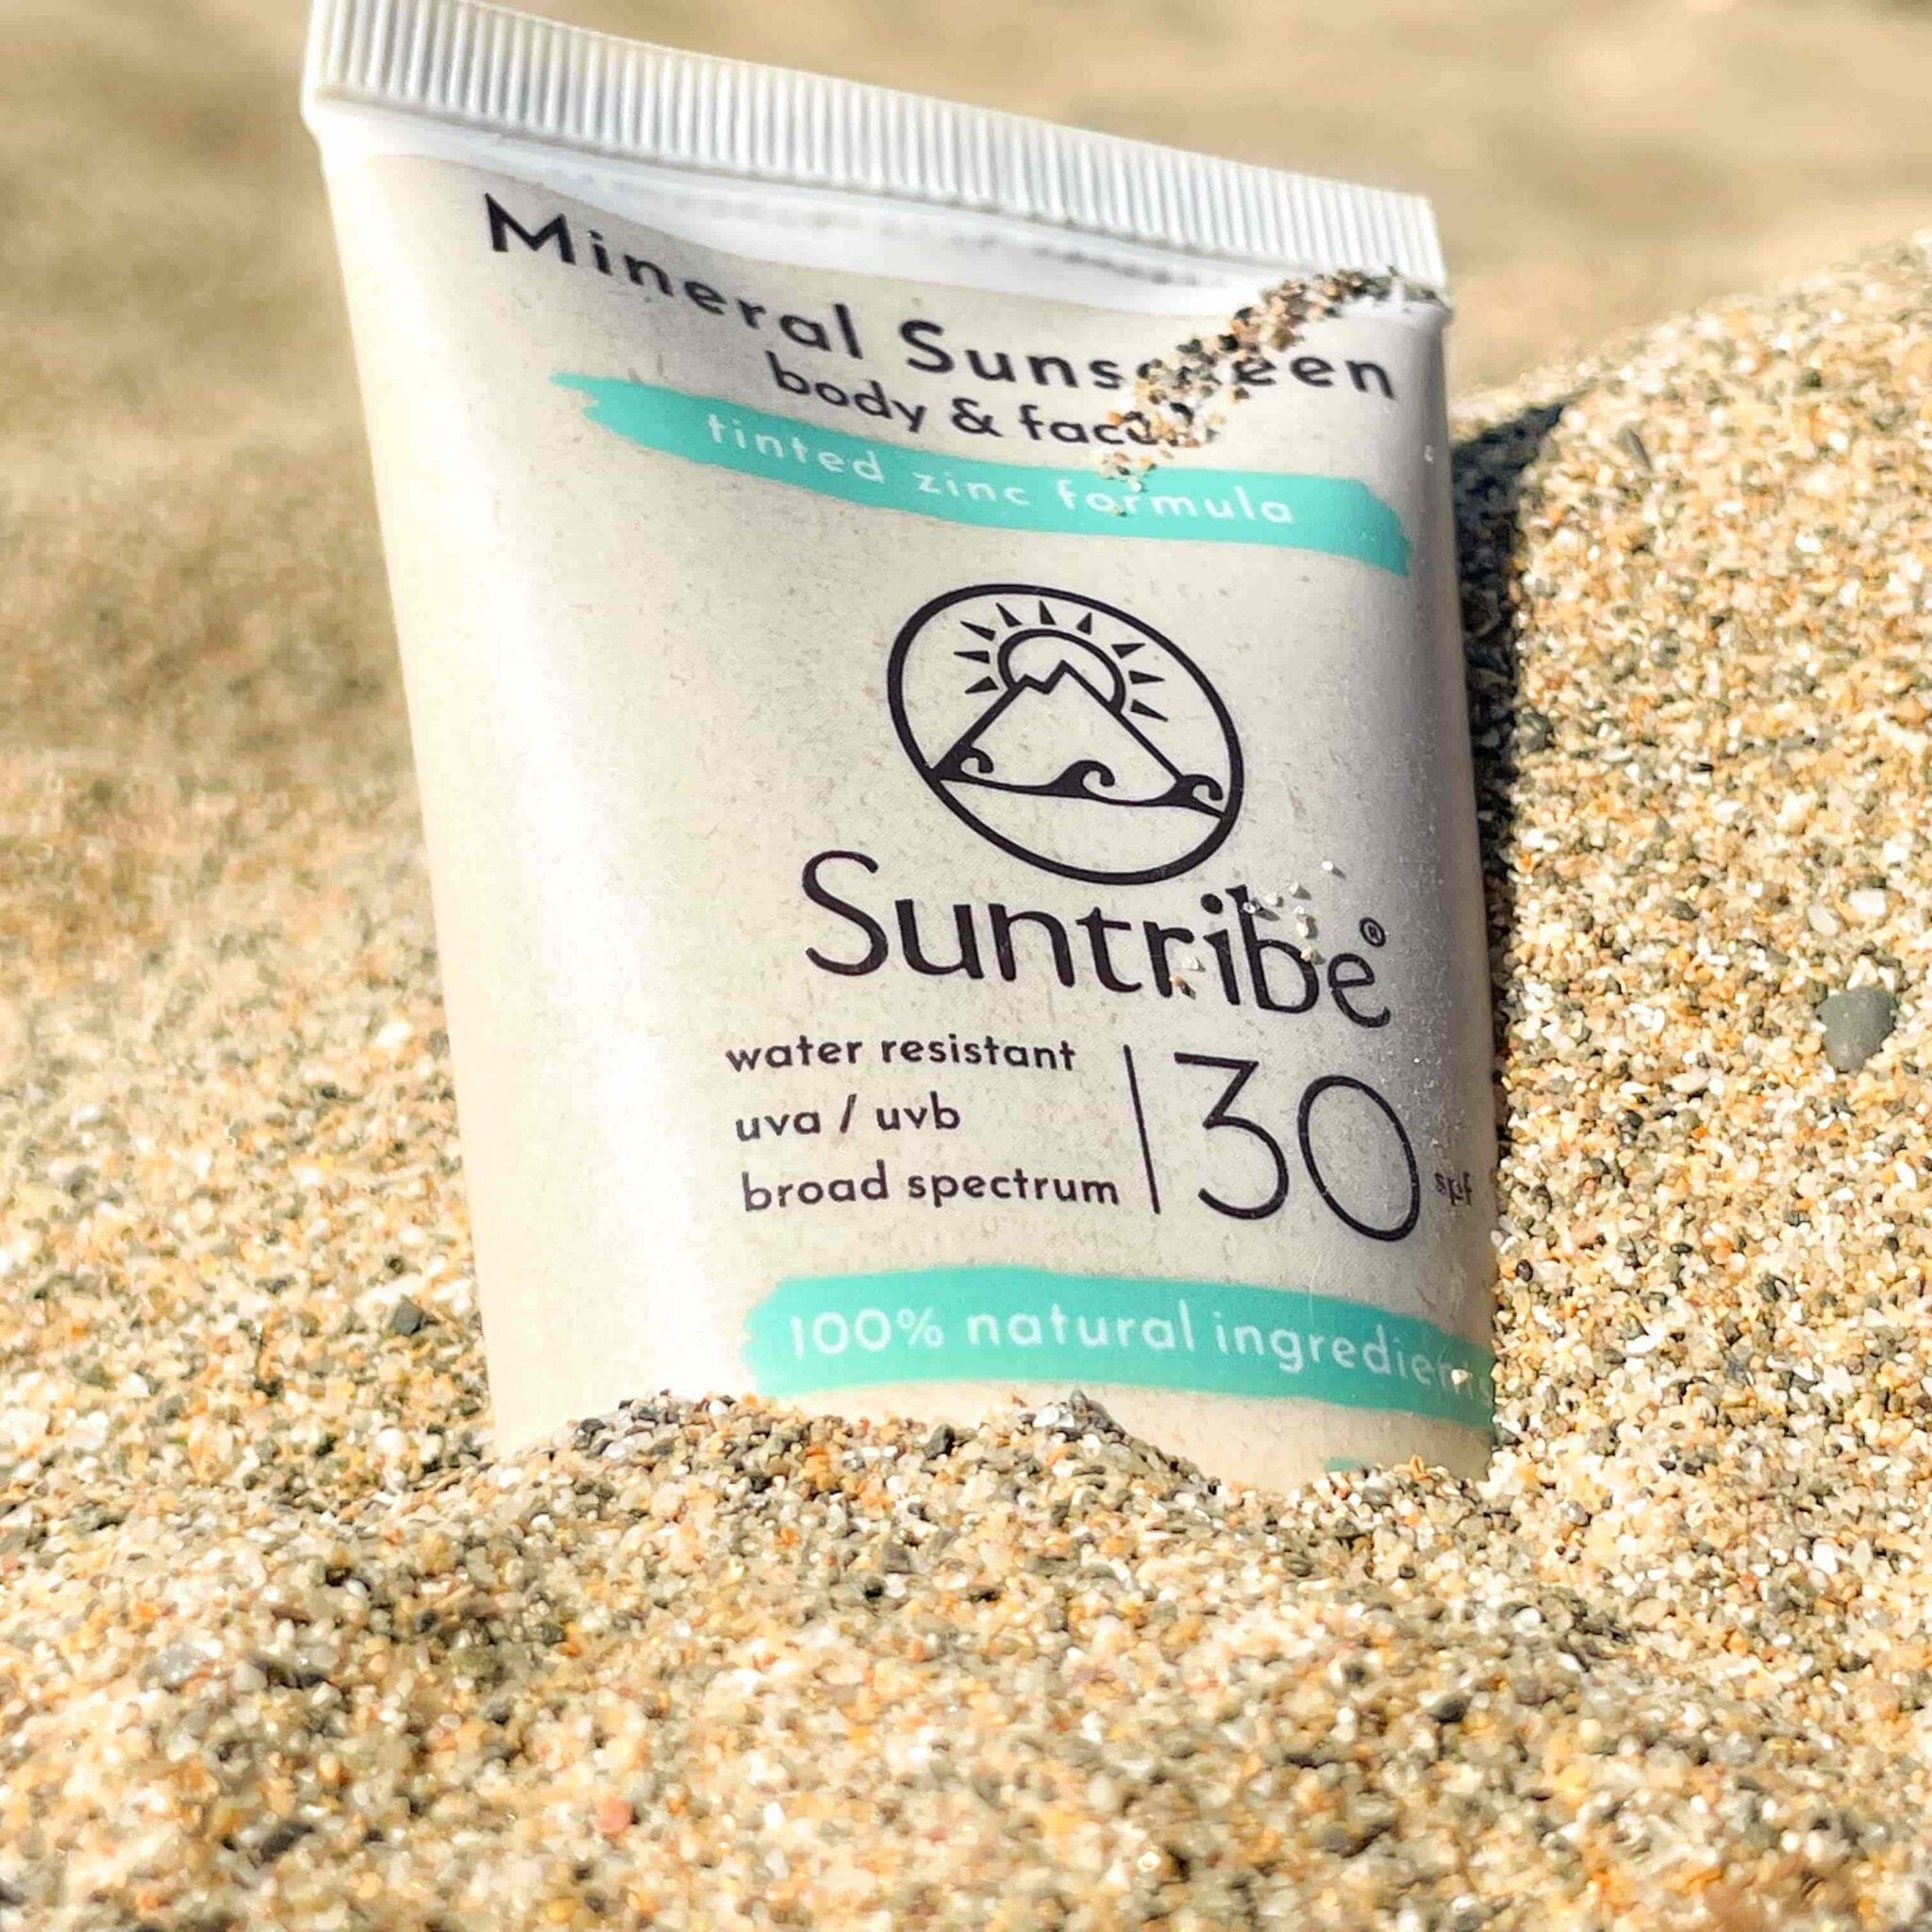 Natural Mineral Sunscreen SPF 30